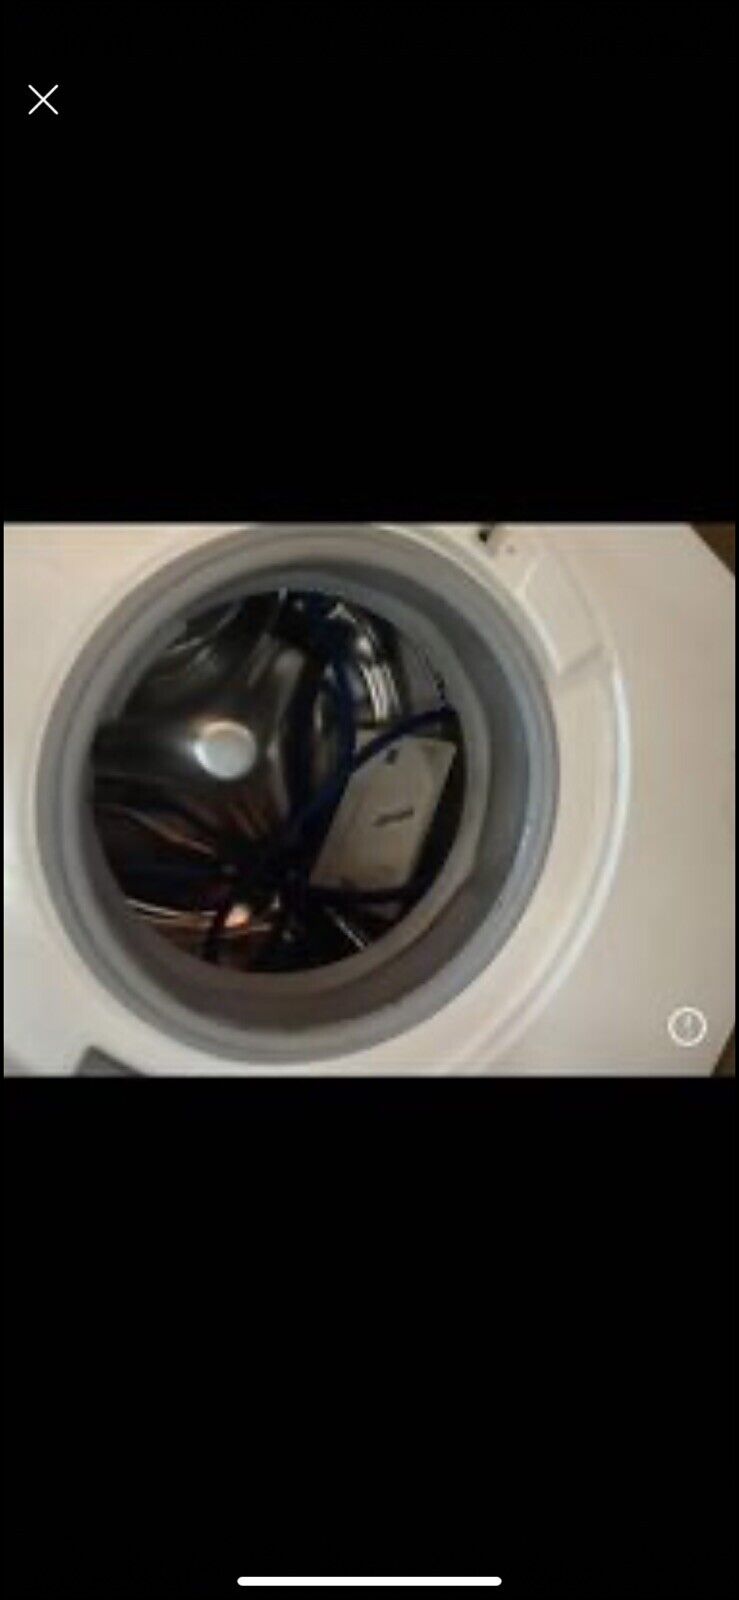 BOSCH 7kg Front-Loading Washing Machine - White